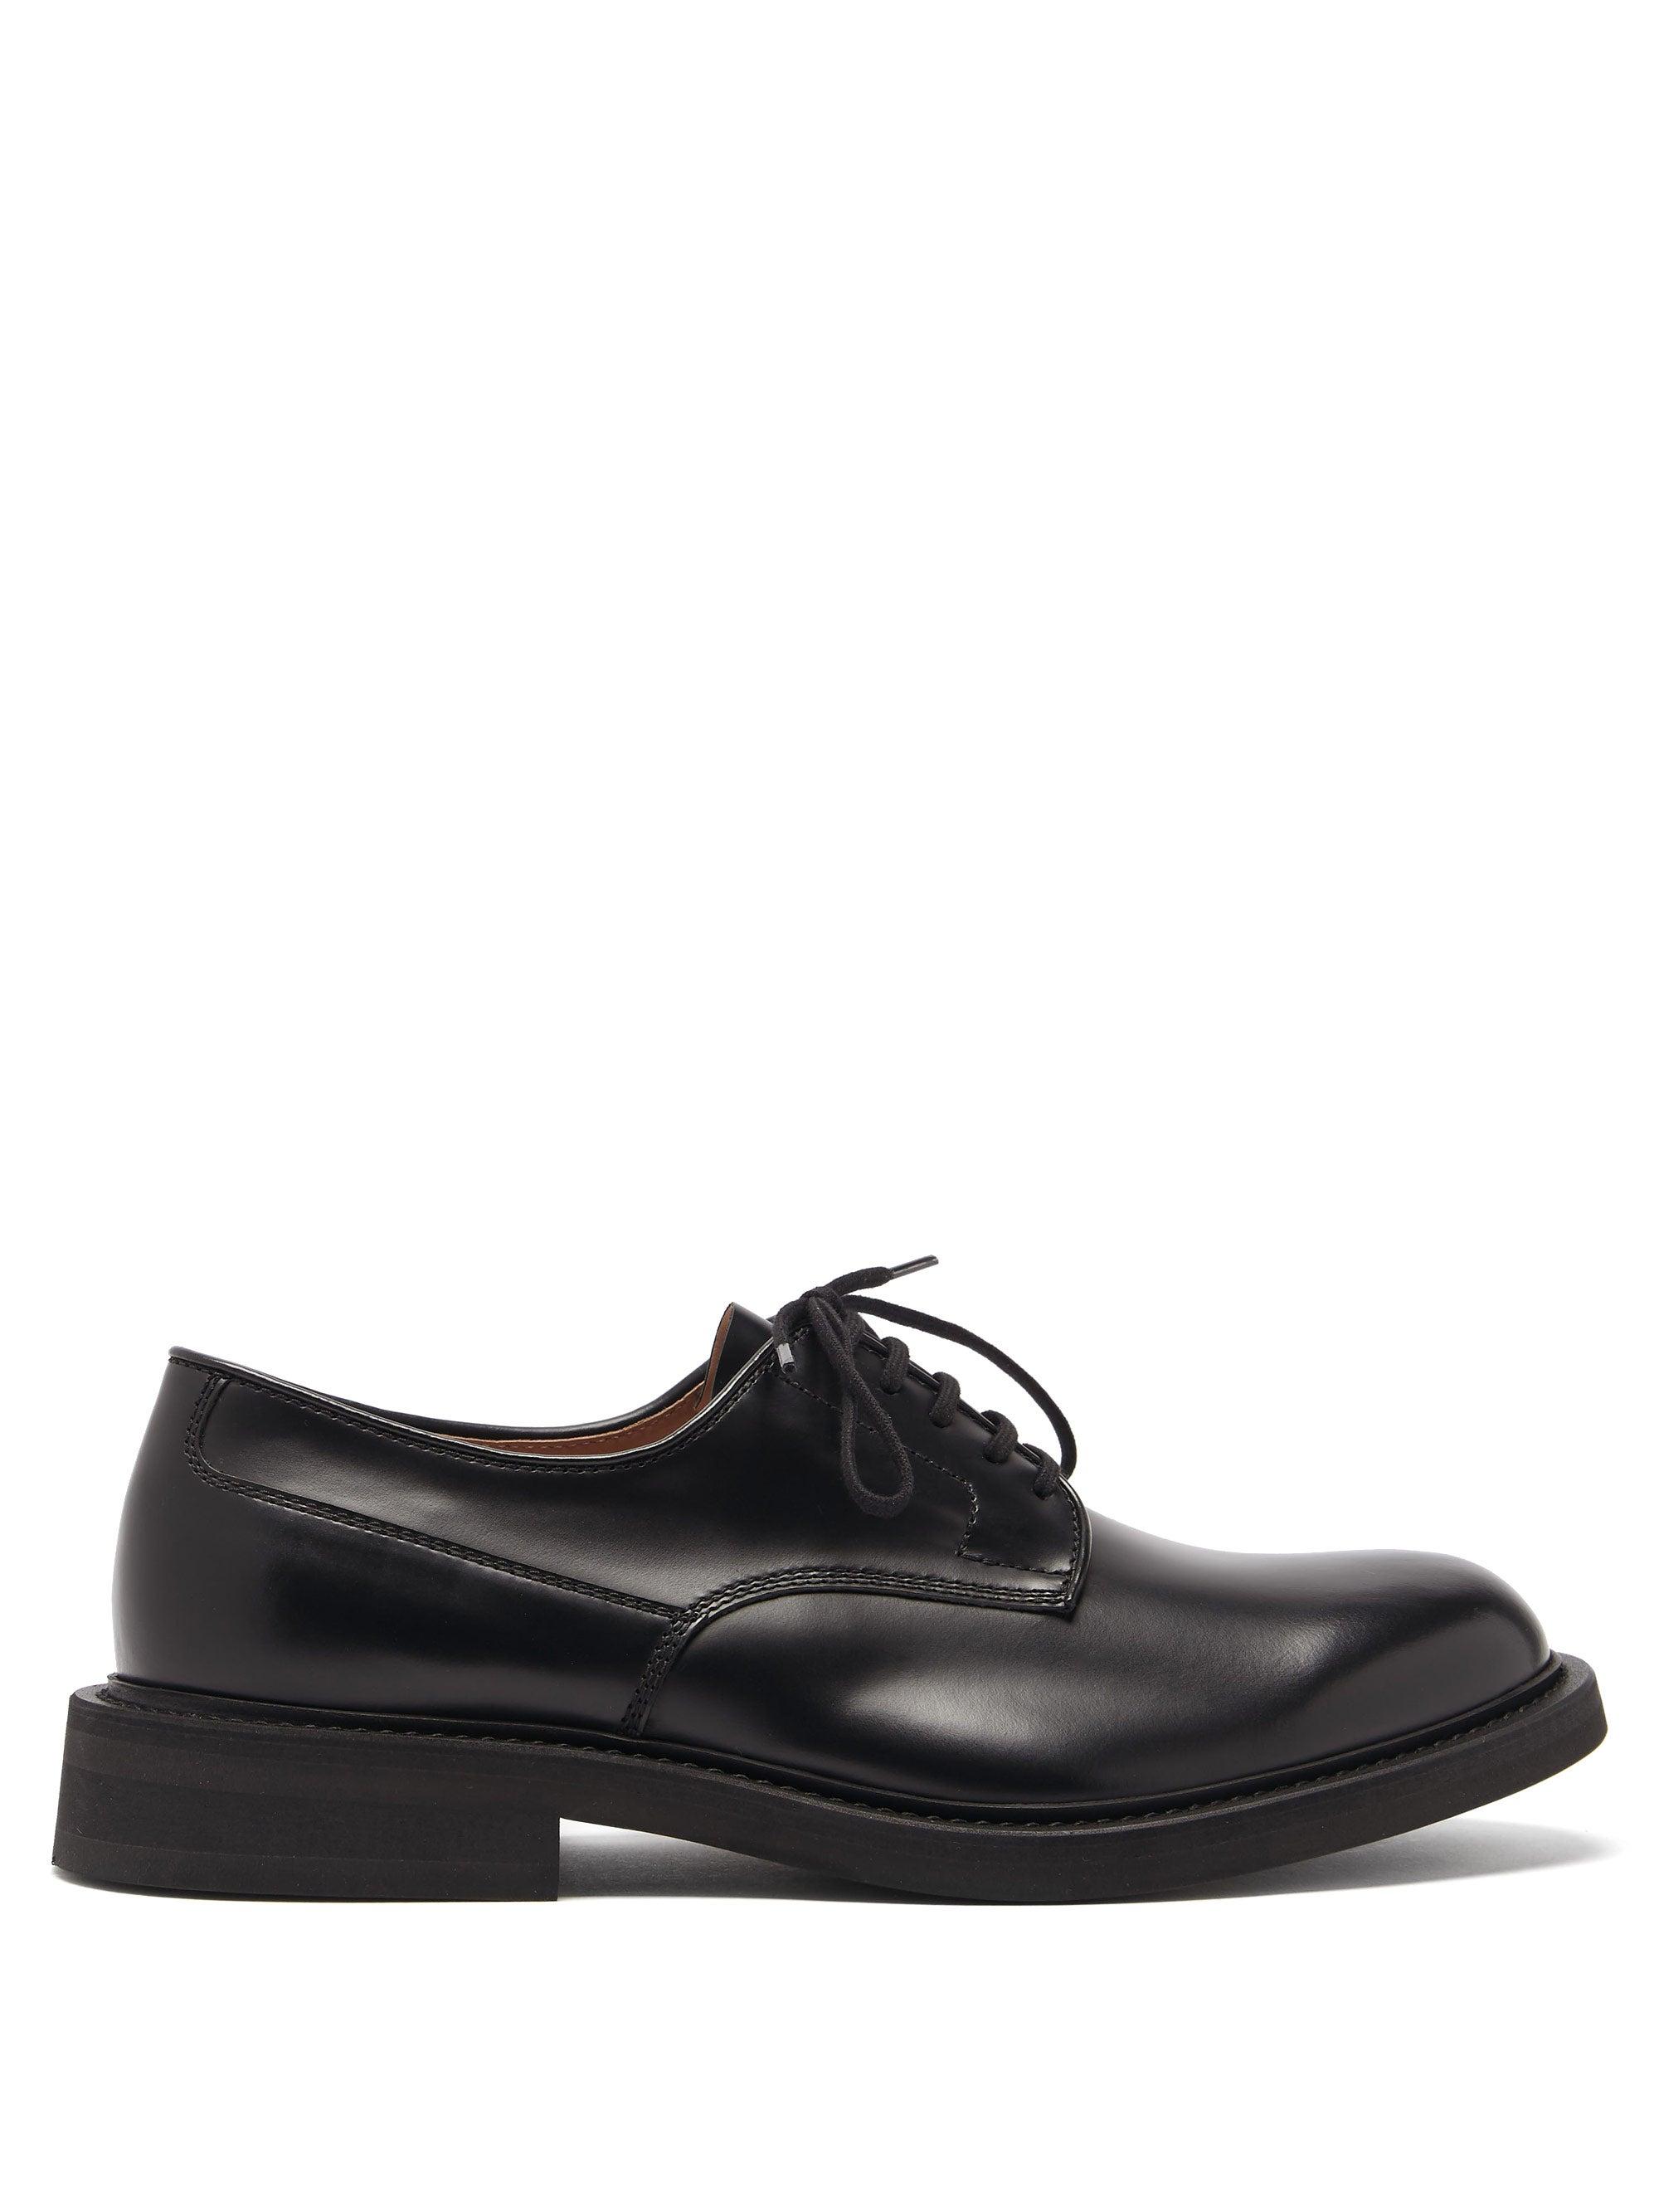 Bottega Veneta Panelled Leather Derby Shoes in Black for Men - Lyst